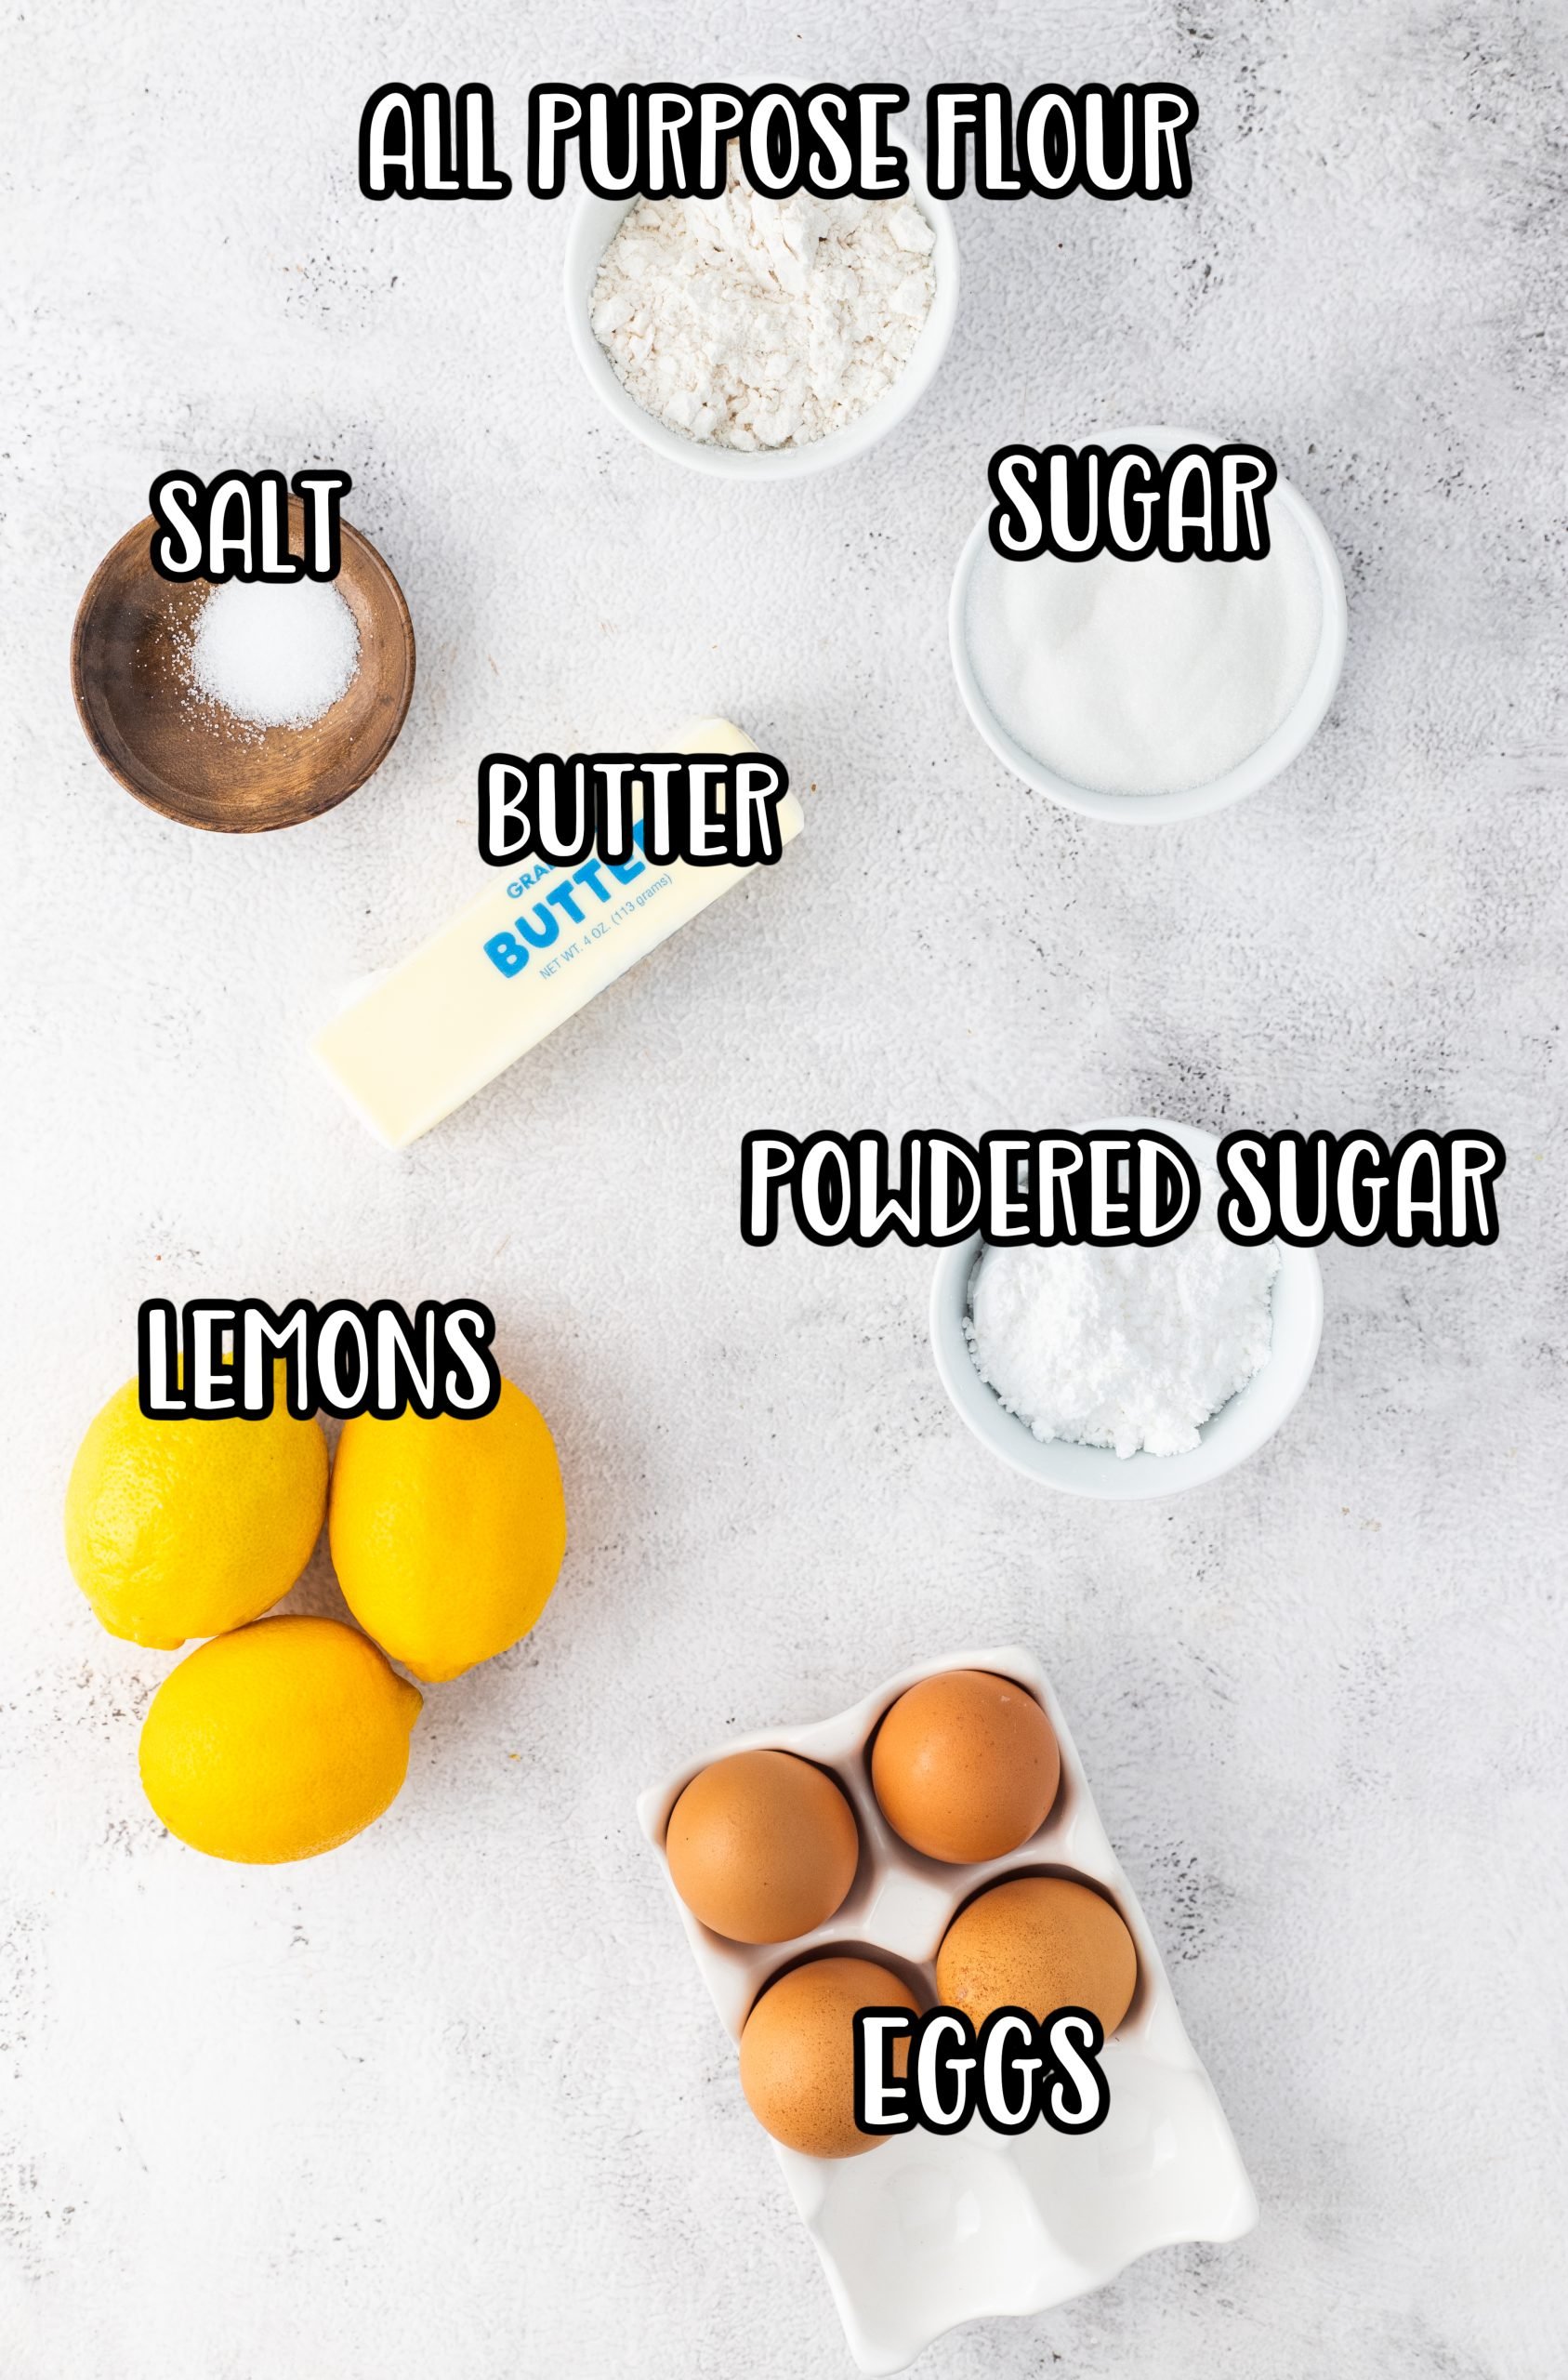 All purpose flour, eggs, lemons, butter, sugar, salt, and powdered sugar.